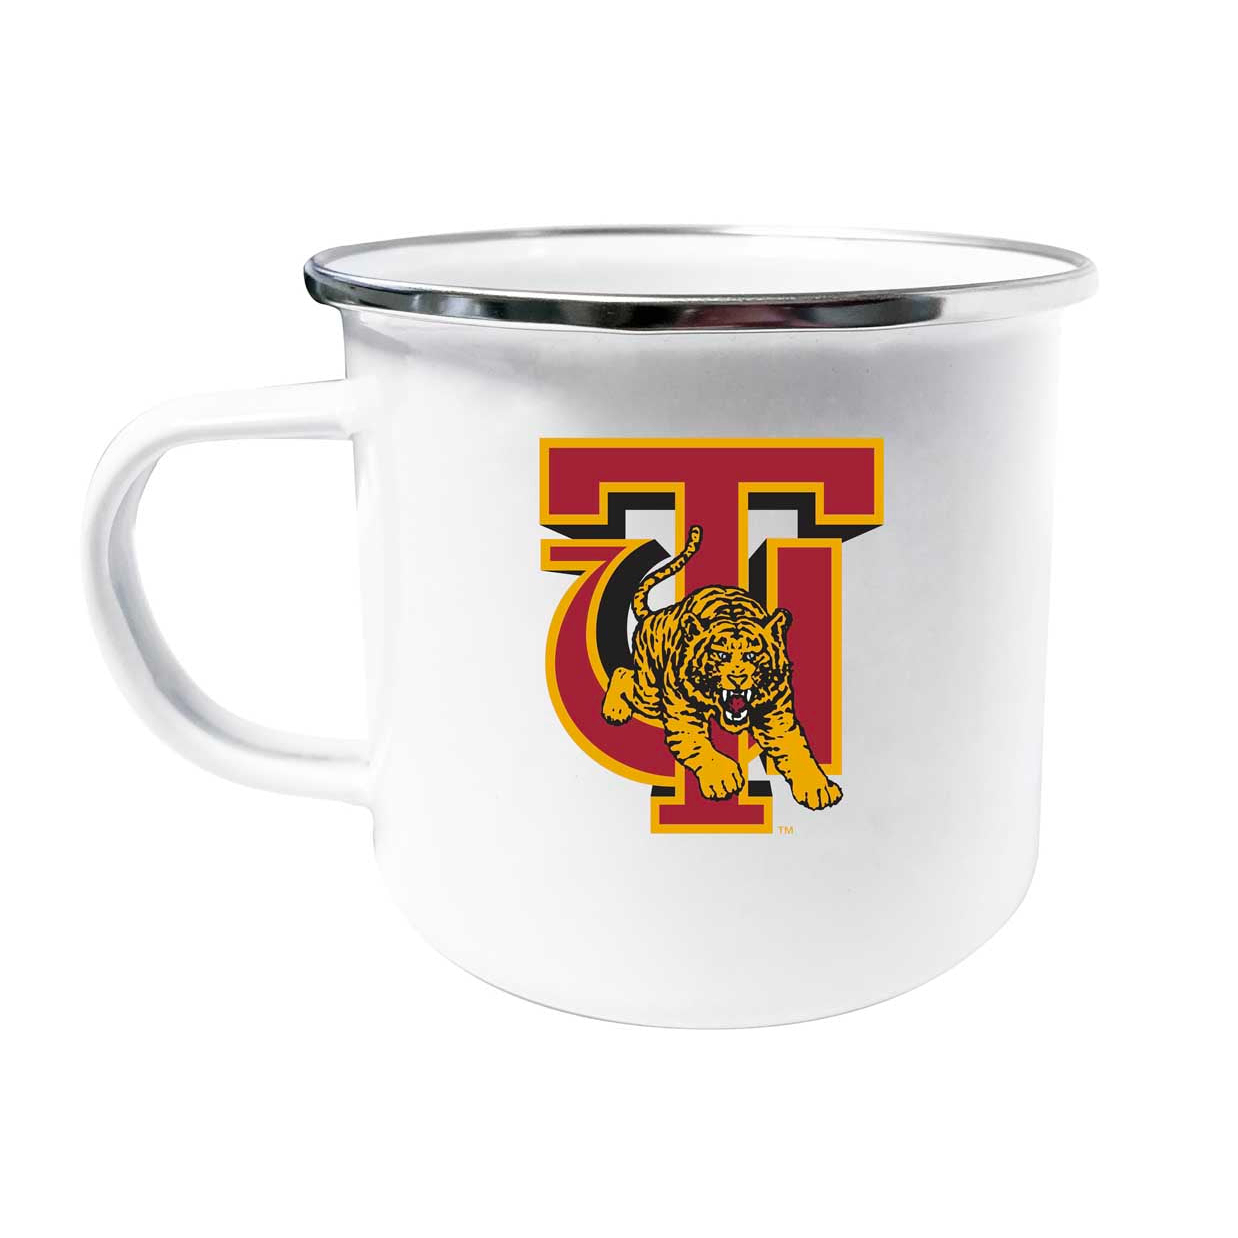 Tuskegee University Tin Camper Coffee Mug - Choose Your Color - Gray